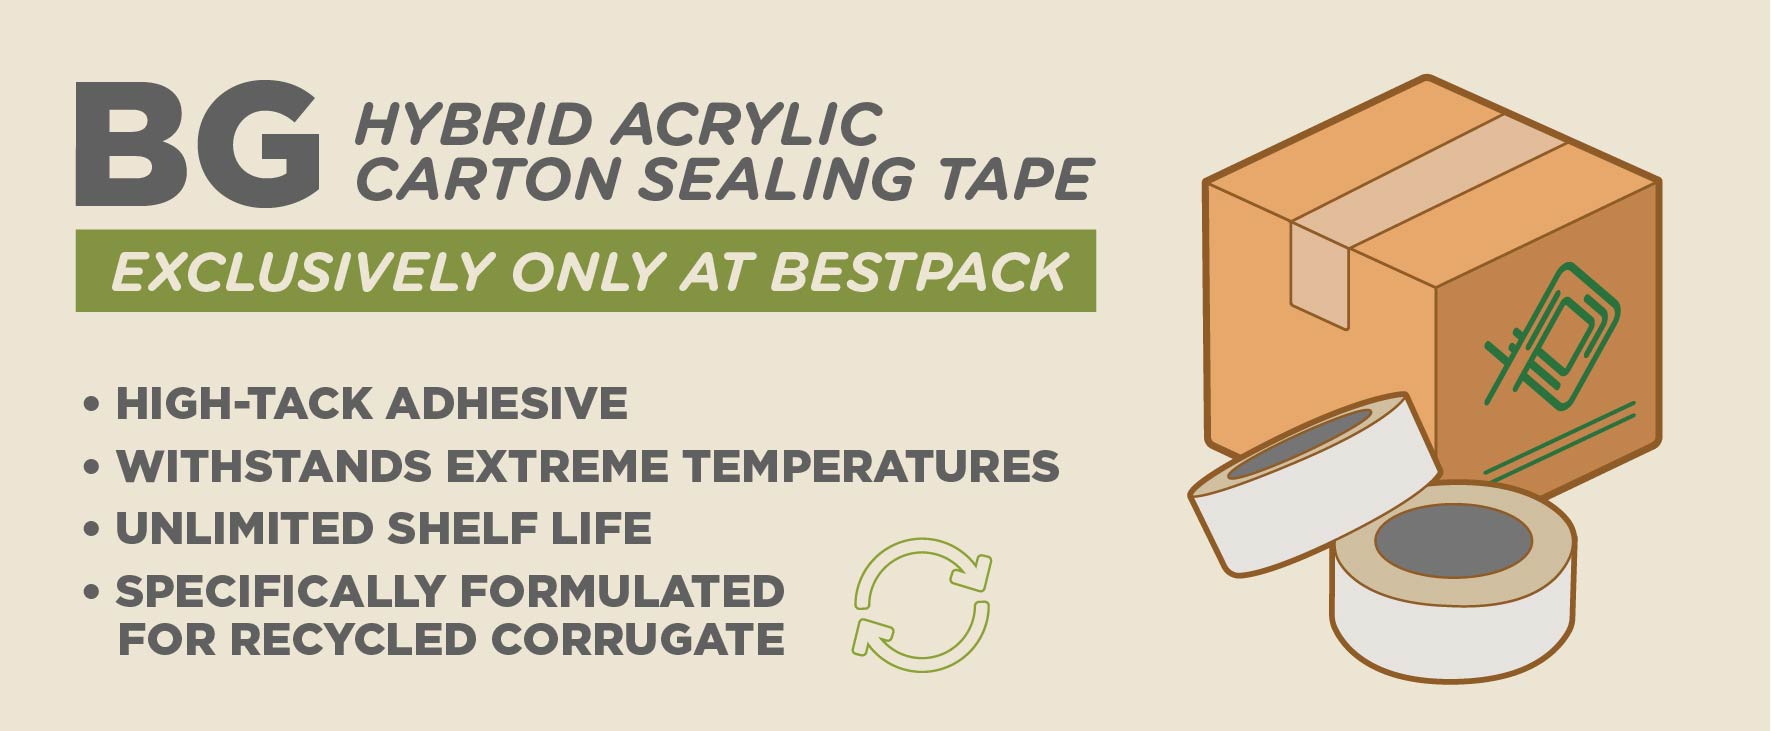 Bestpack Carton Sealing Tape BG Acrylic Tape